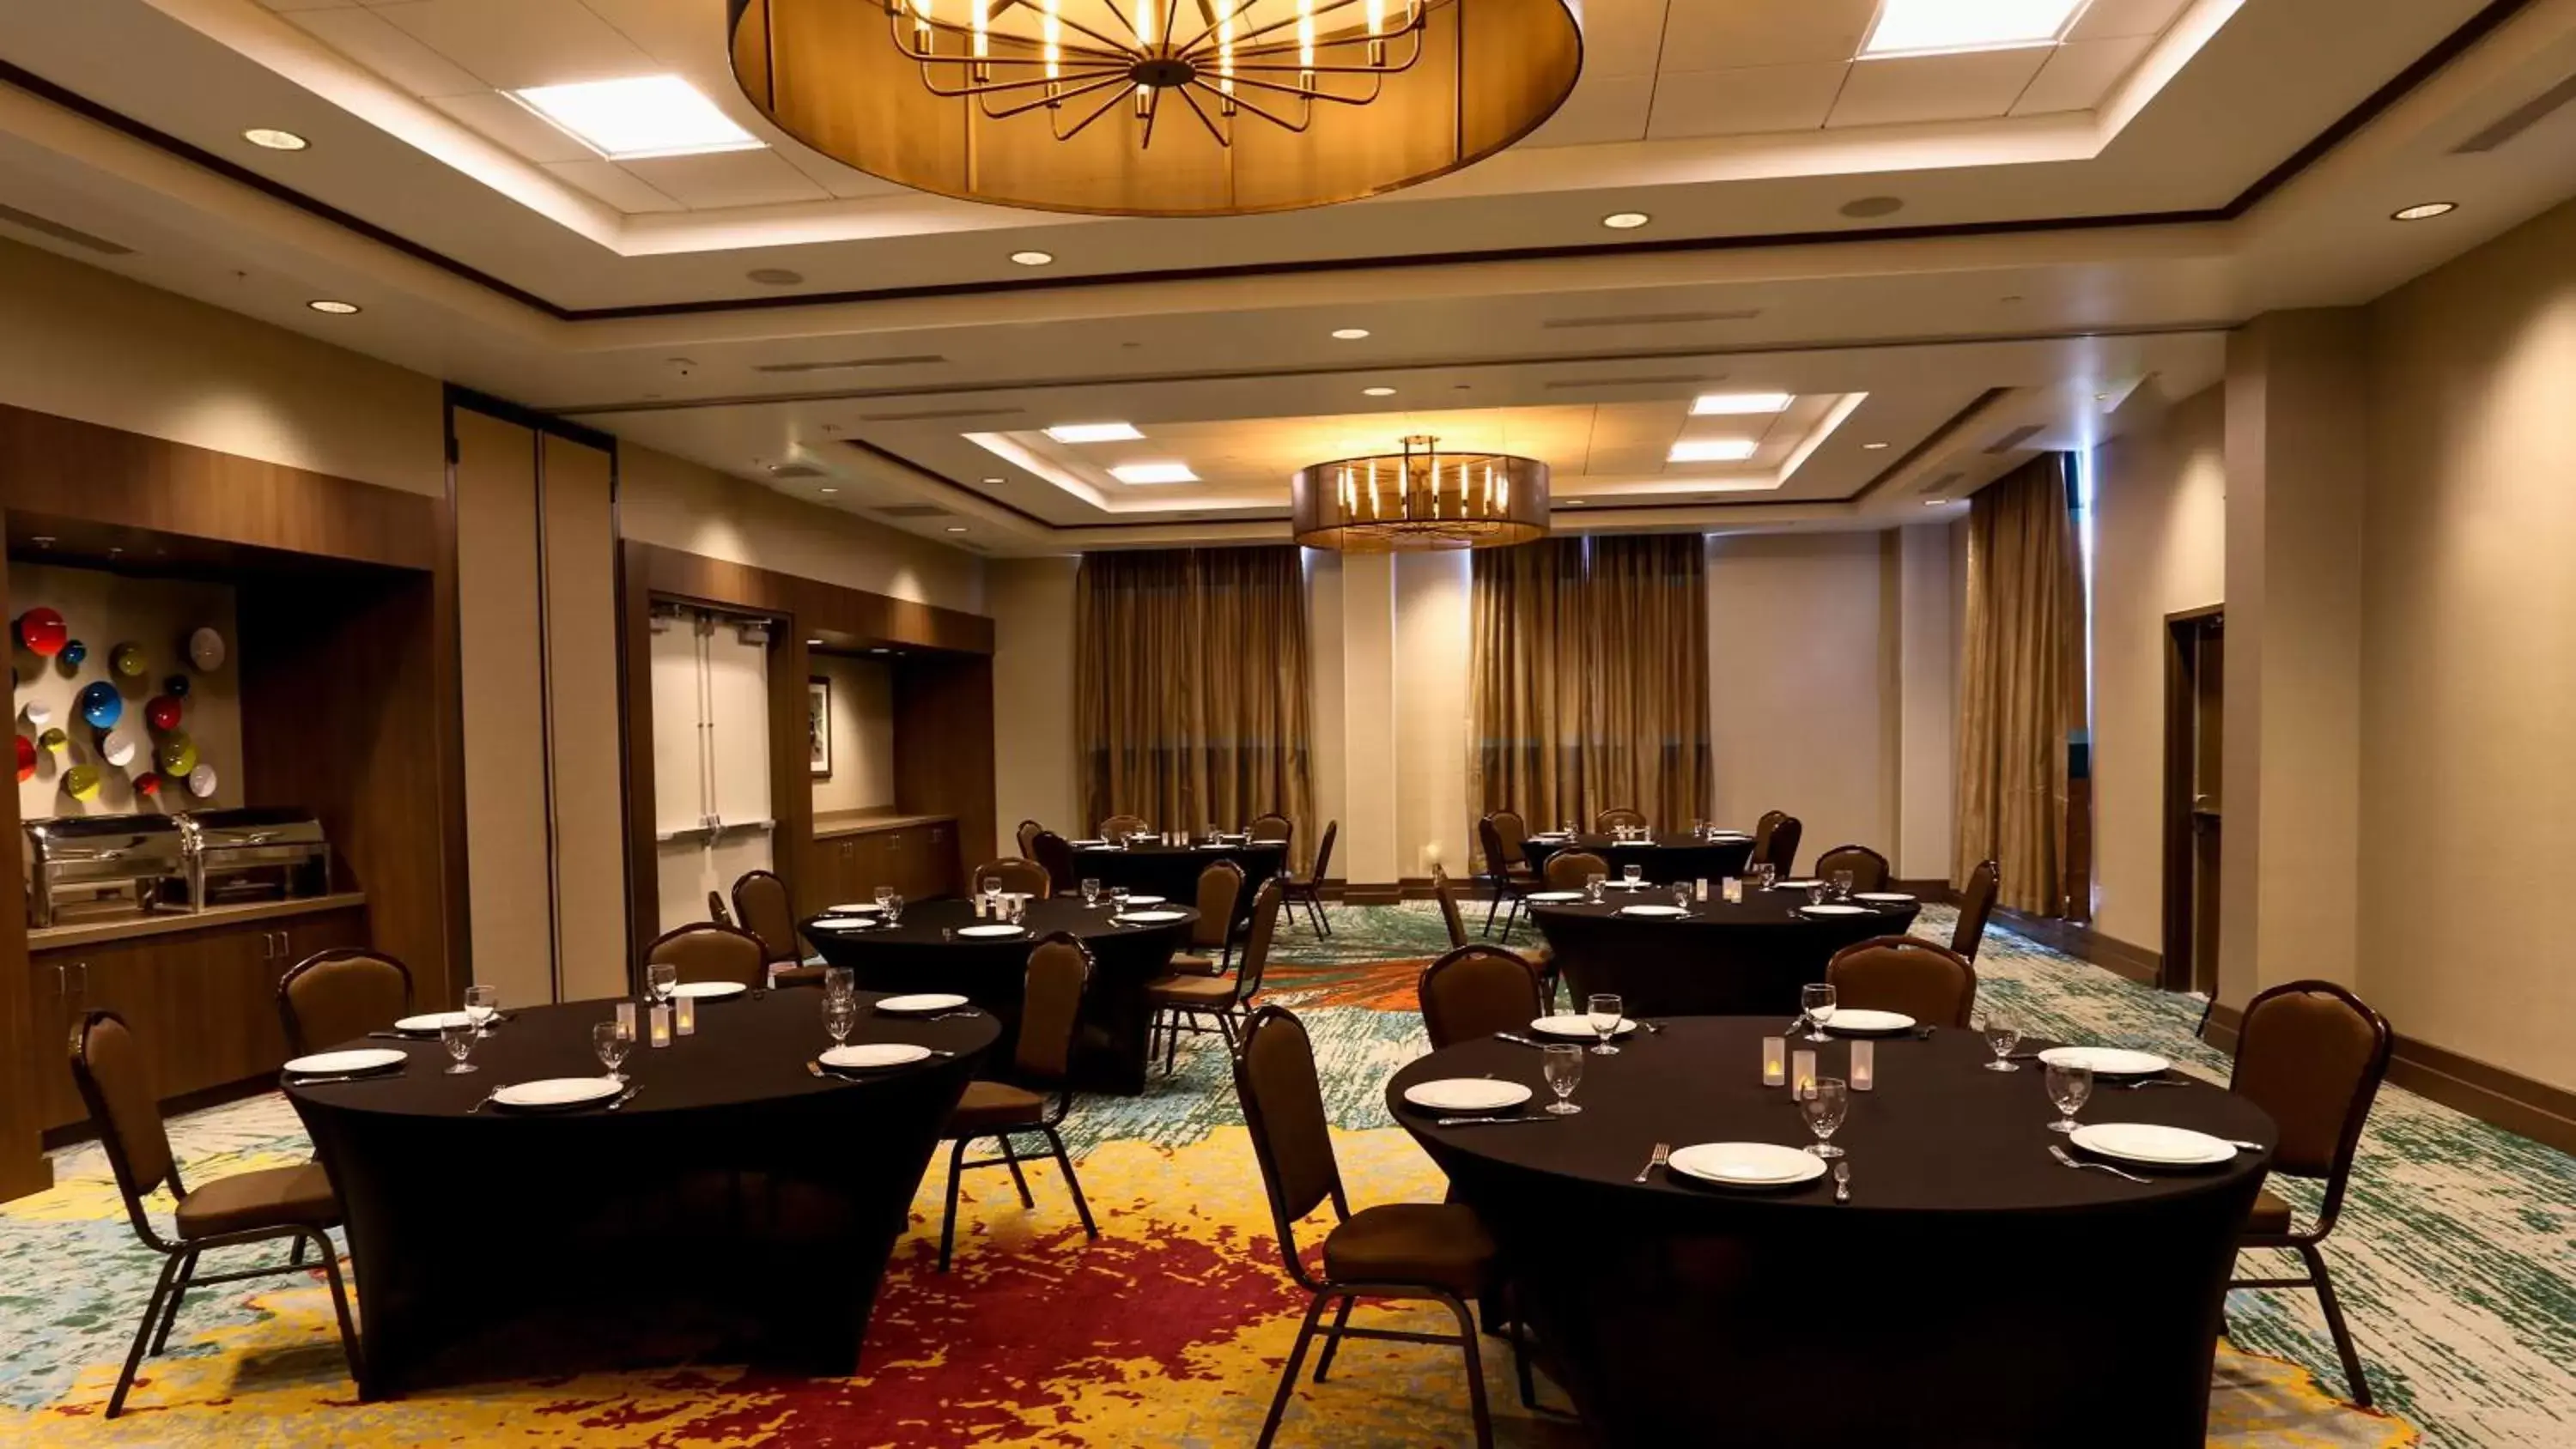 Meeting/conference room in Hilton Garden Inn Arvada/Denver, CO